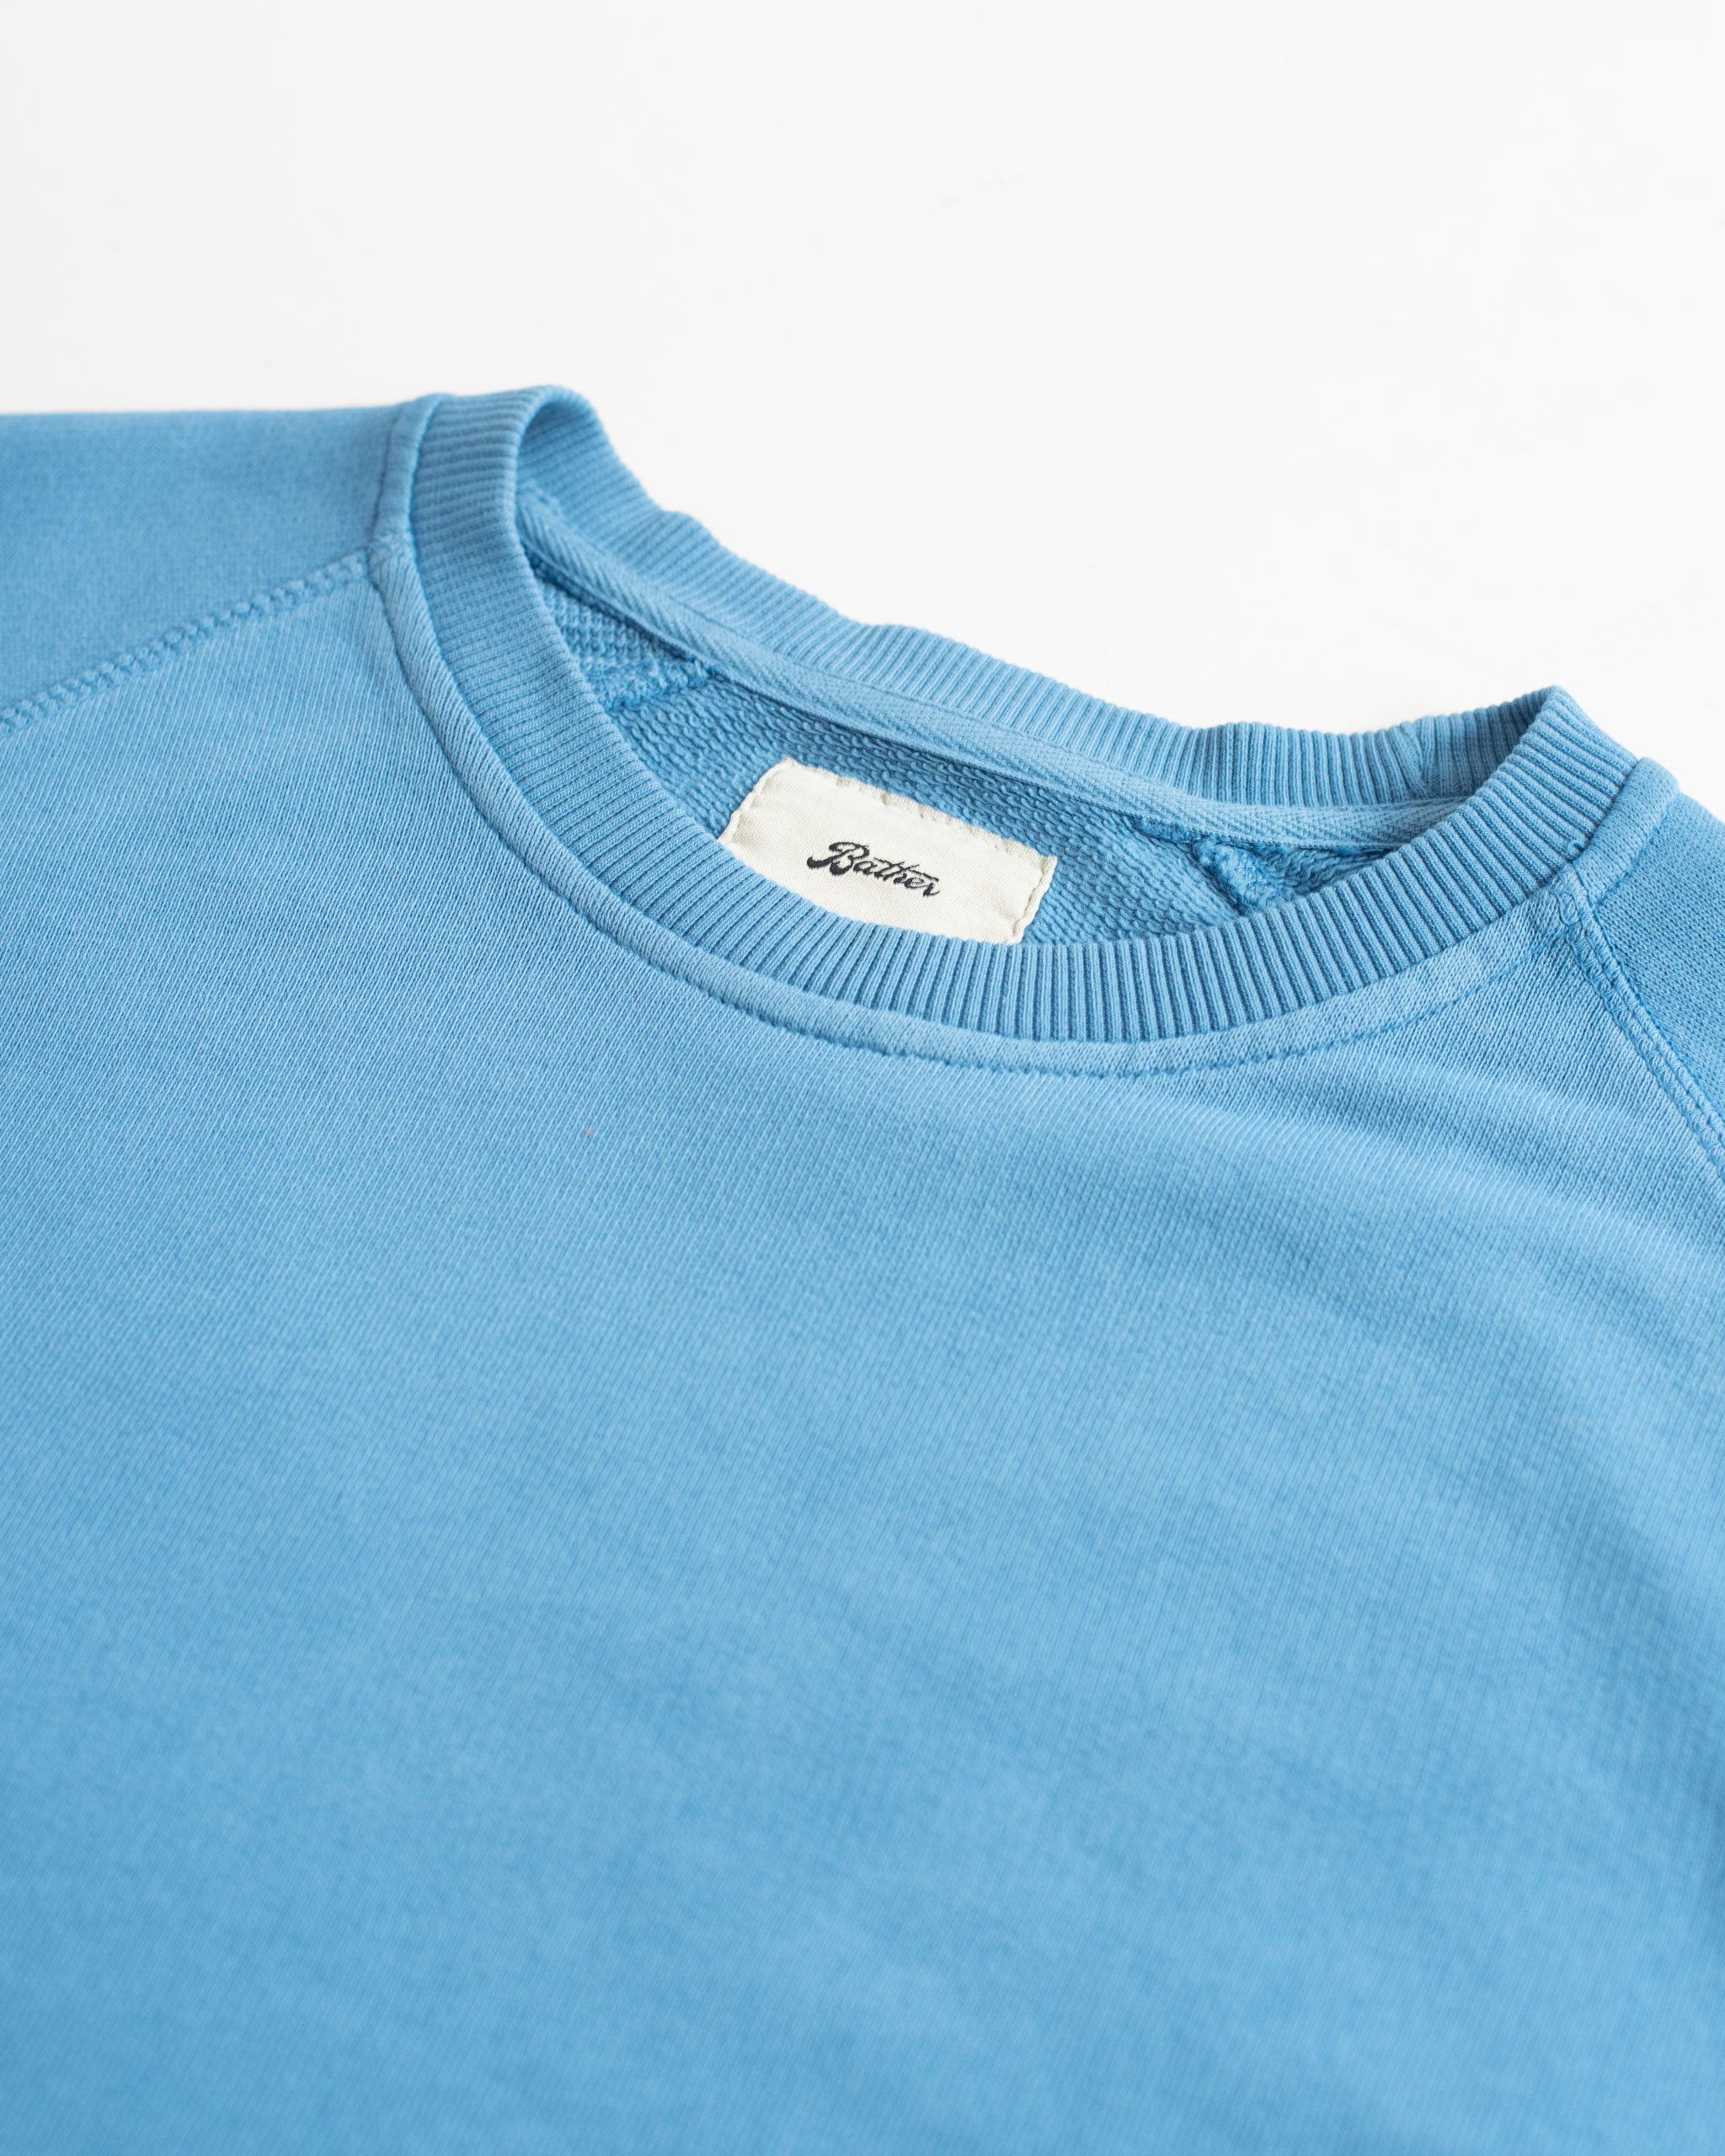 Collar close up of Solid Blue French Terry Cotton Raglan Sleeve Crewneck Sweatshirt